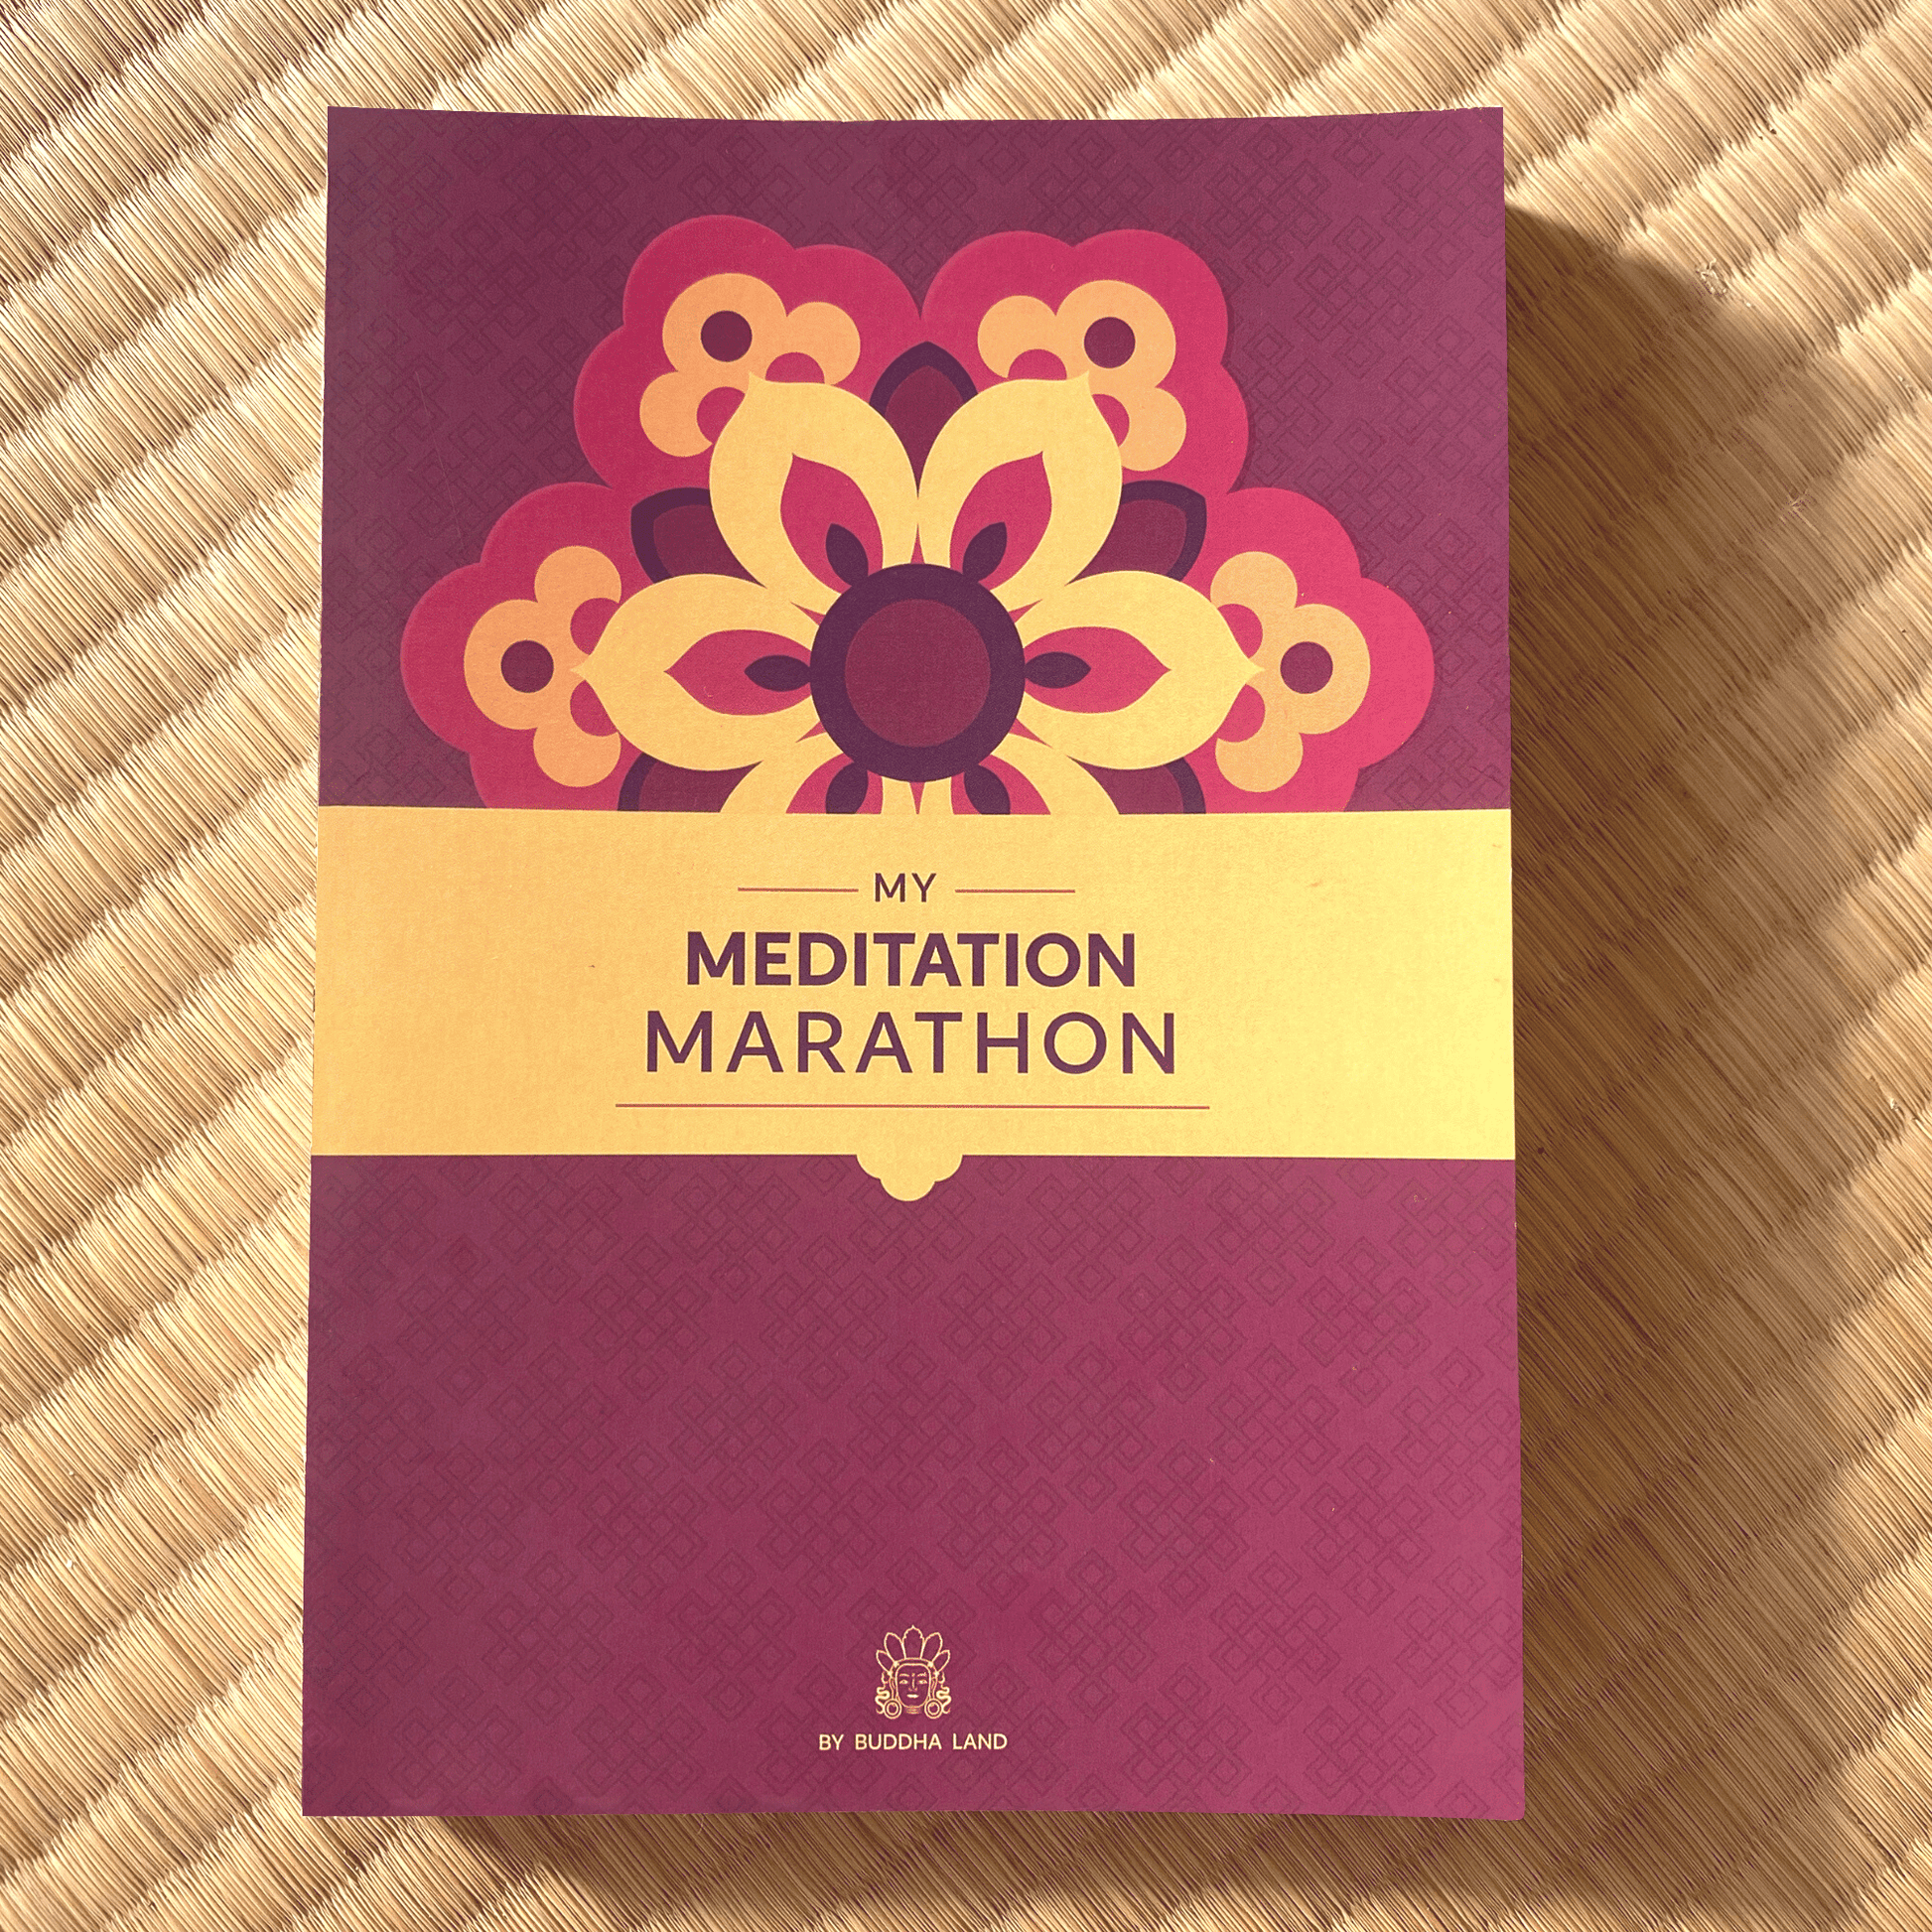 My Meditation Marathon Mindfulness Journal Cover.